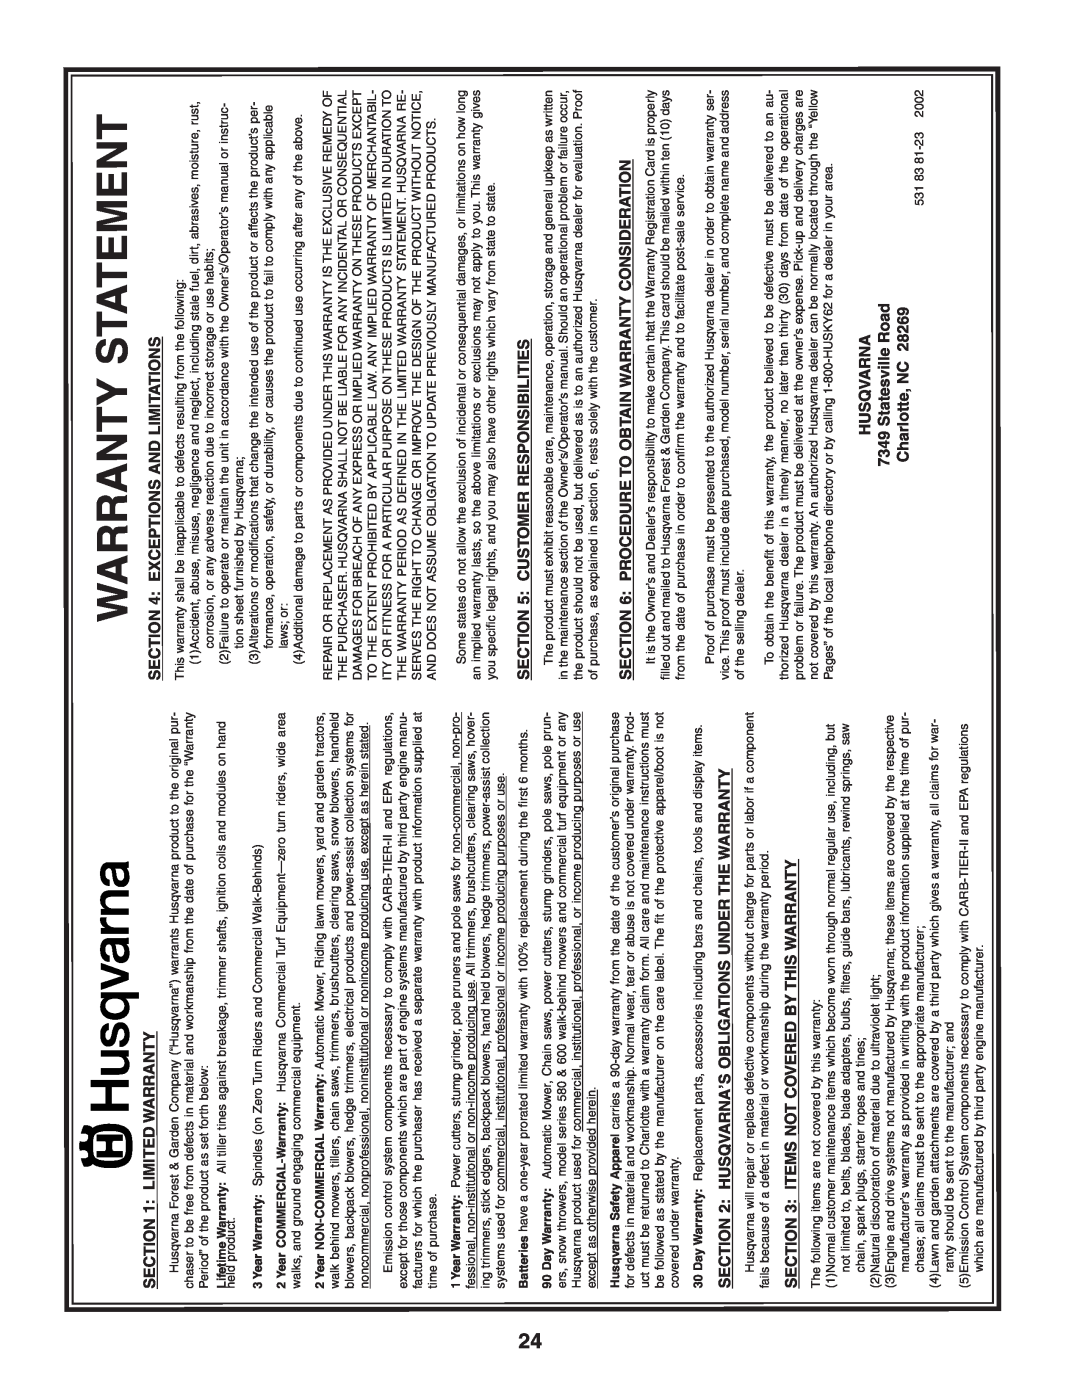 Husqvarna 5521RS owner manual Statementwarranty, 2002 23-81, HUSQVARNA RoadStatesville 